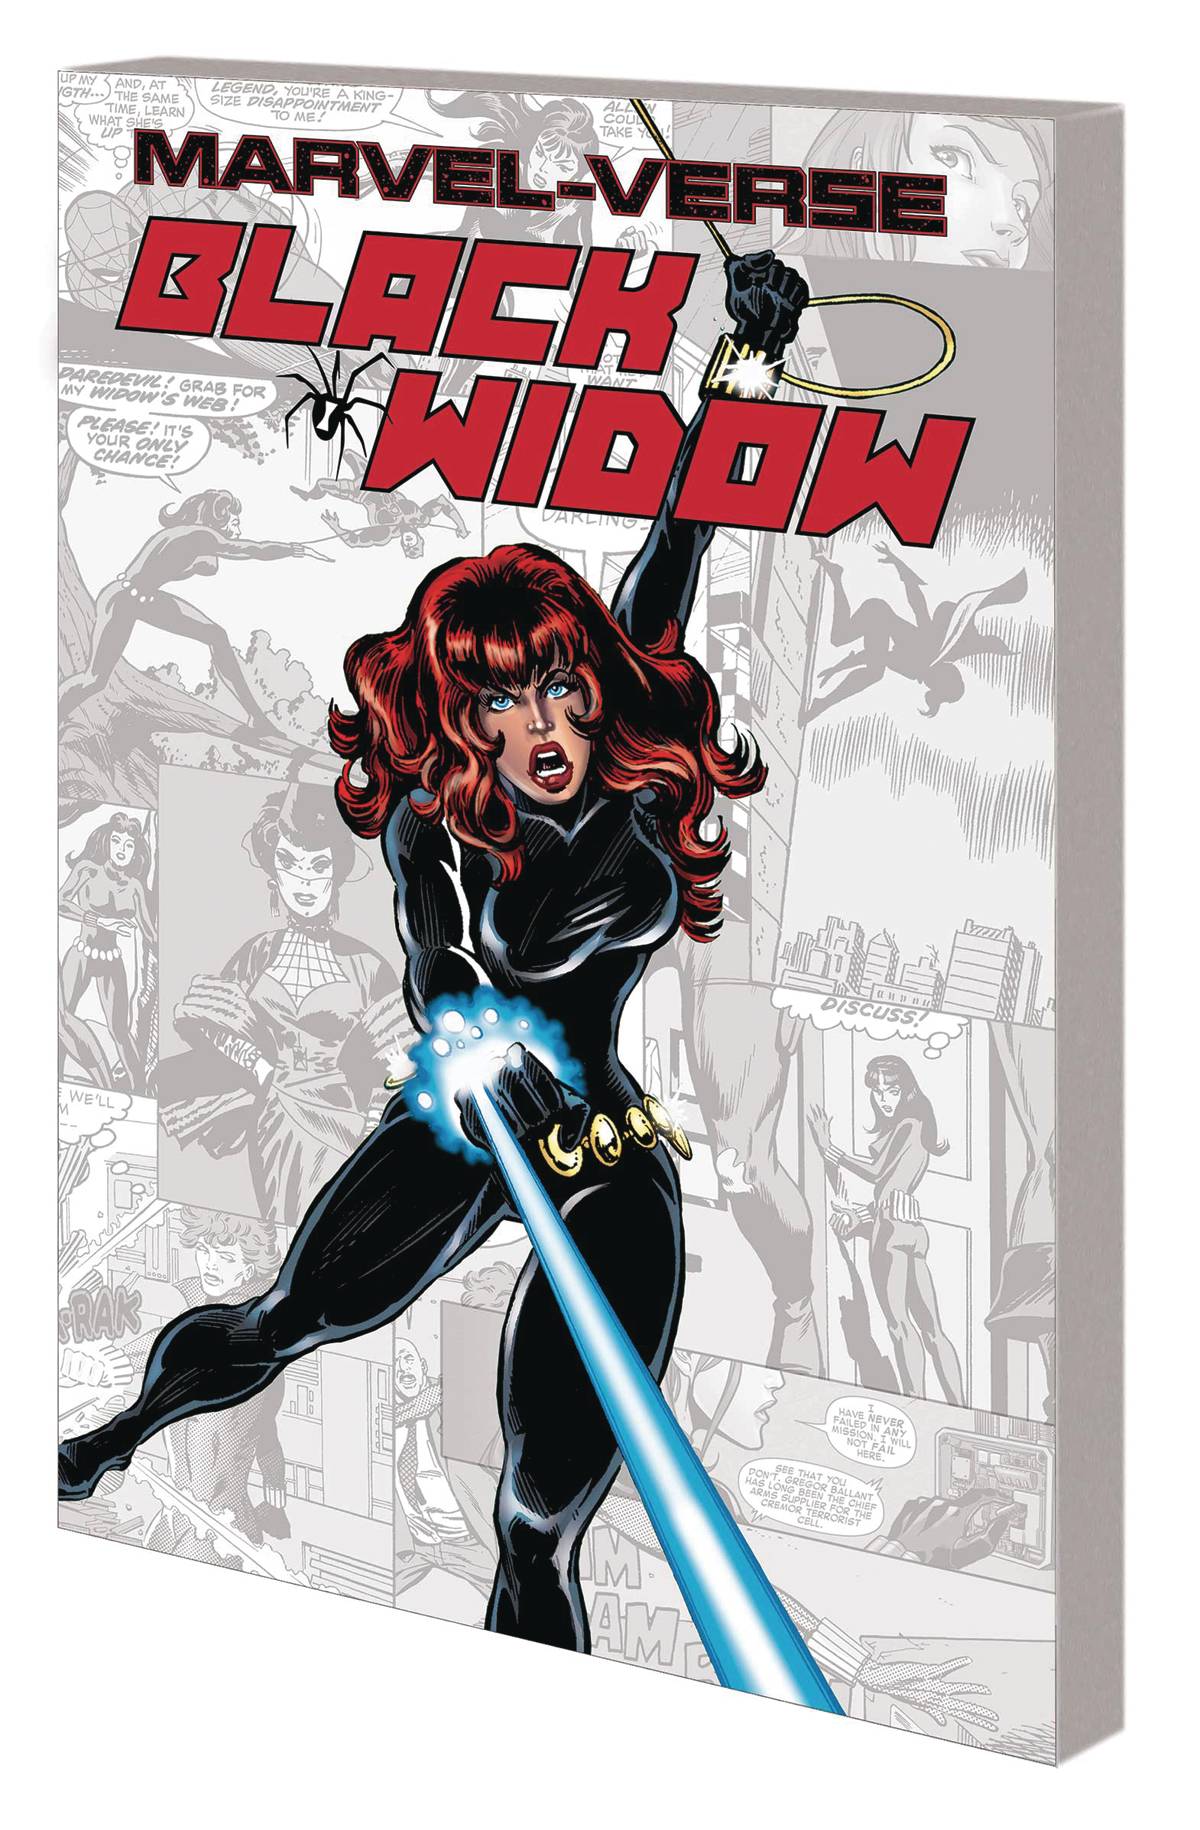 Marvel-Verse Graphic Novel Volume 3 Black Widow